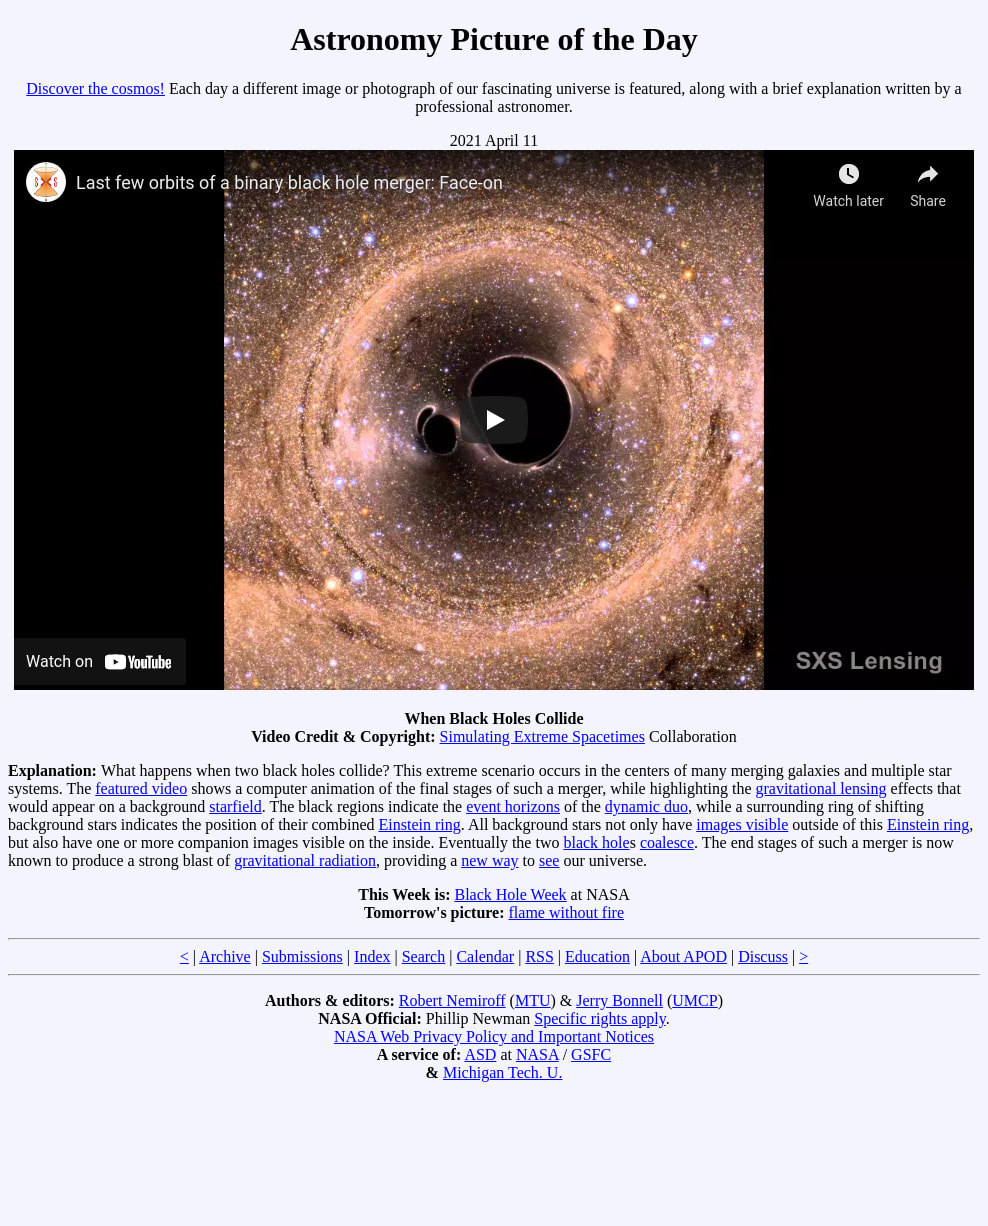 APOD: 2021 April 11 - When Black Holes Collide